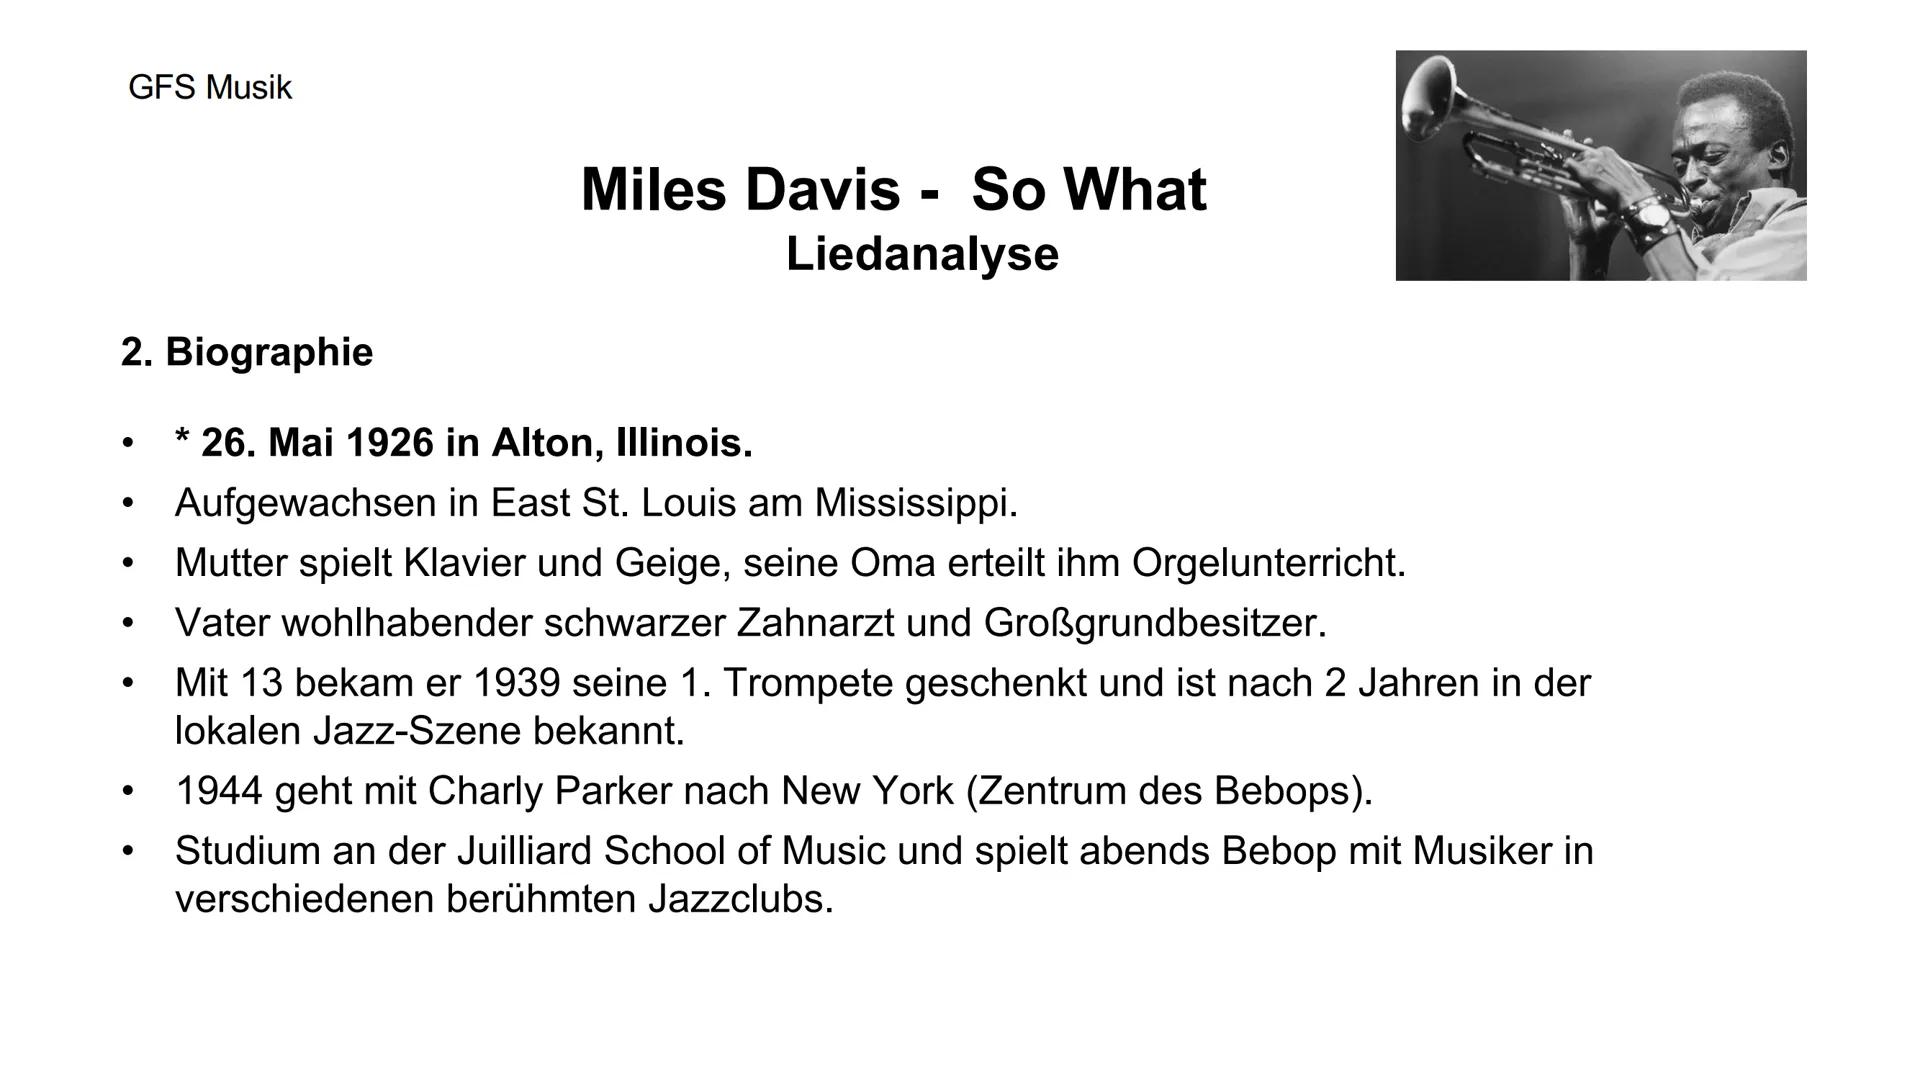 Miles Davis - So what
SO WHAT?
MILES DAVIS
GFS Musik
ORIGINAL MASTER RECORDING
MILES DAVIS Kind of Blue
with Julian "Cannonball Adderley
Pau